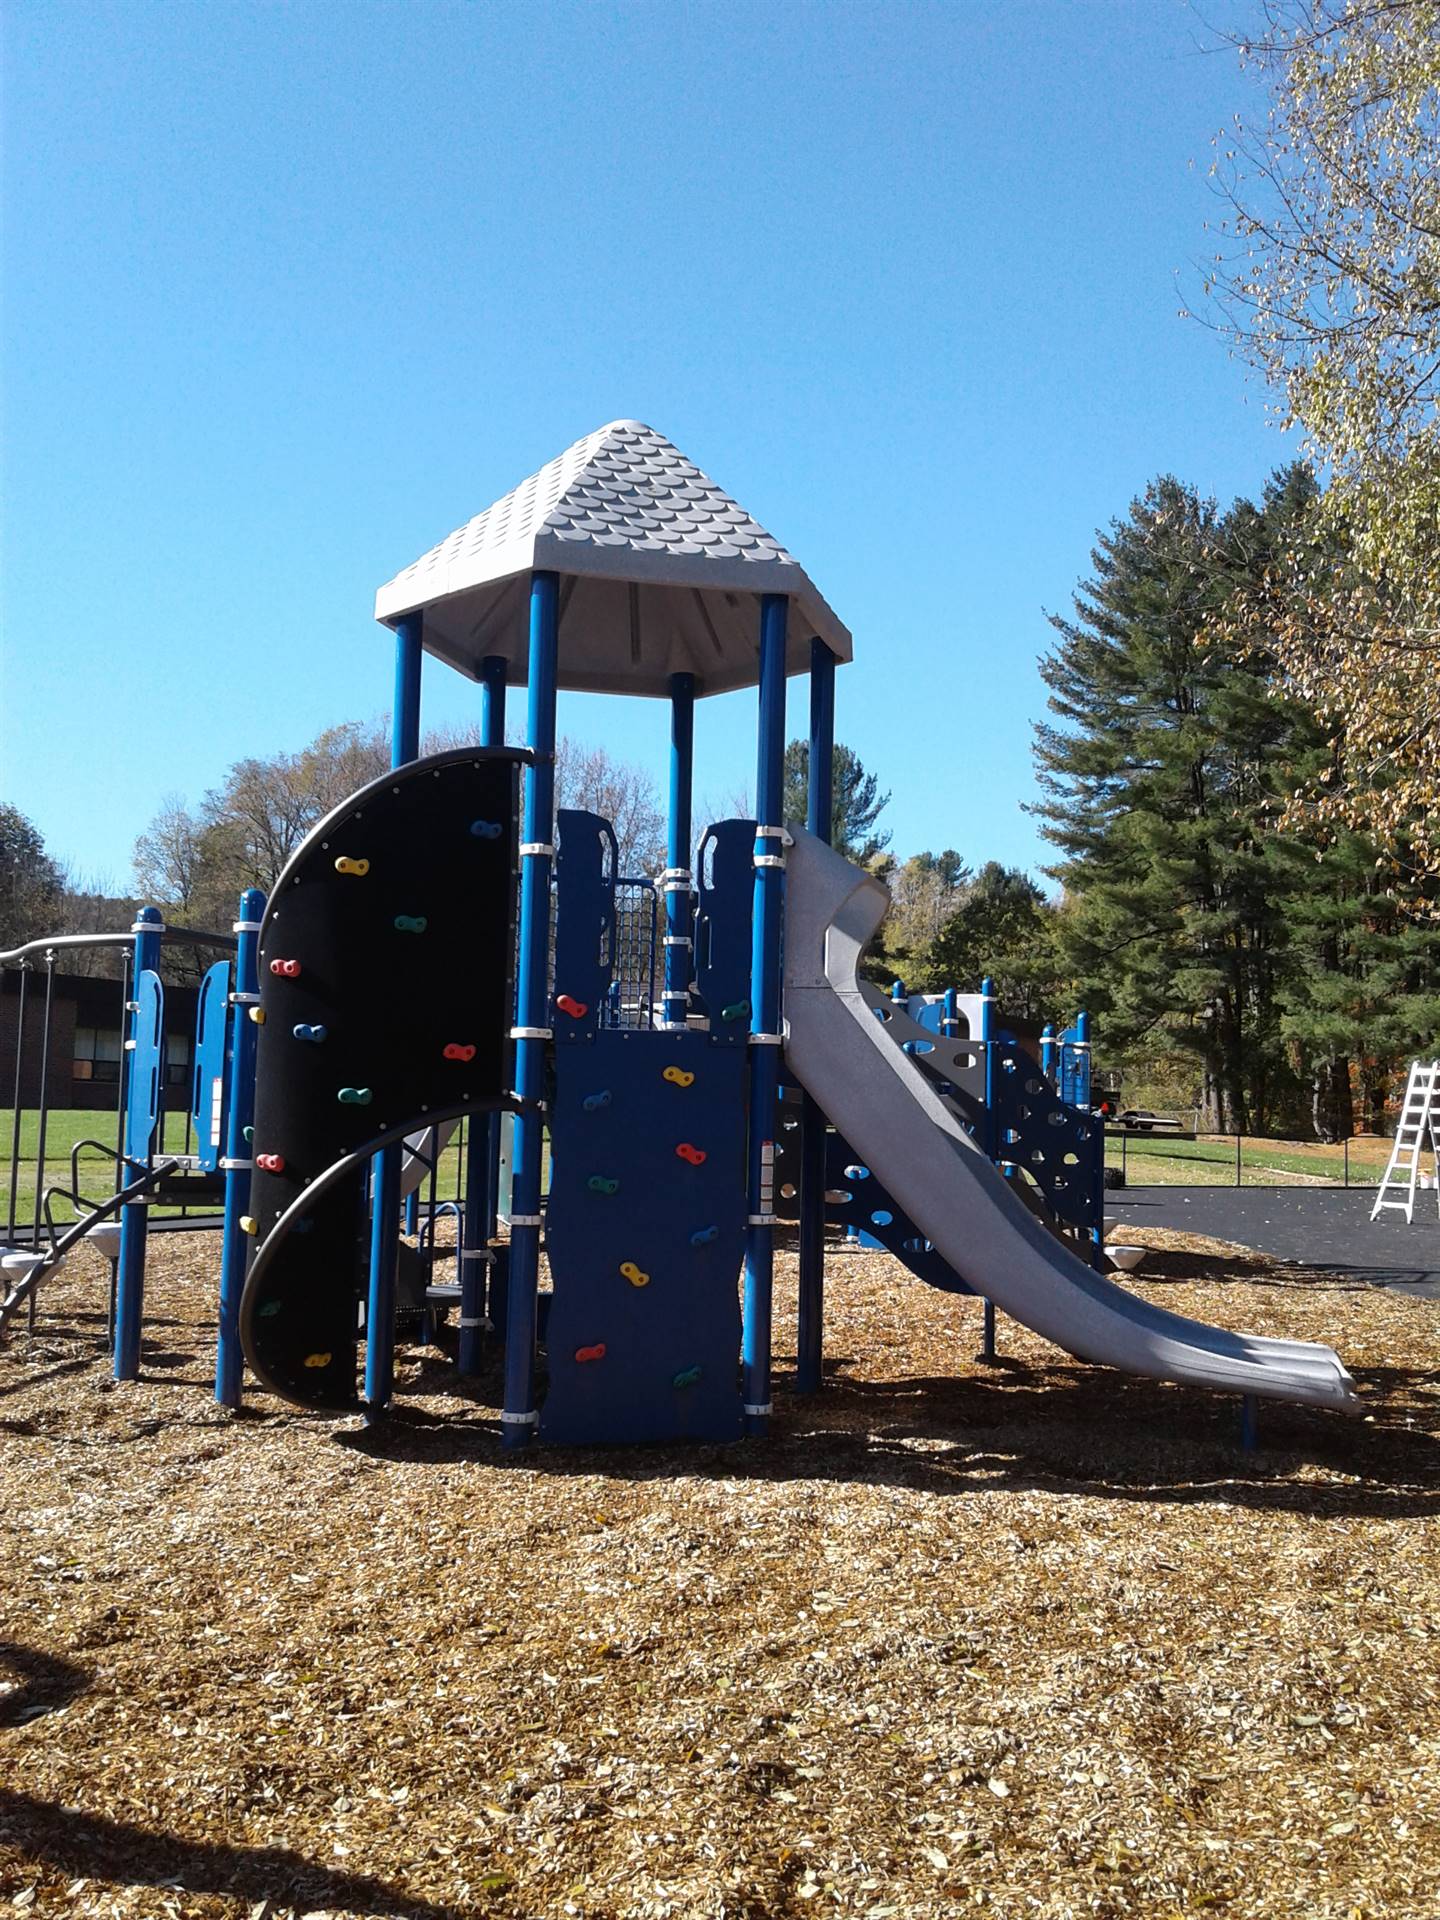 New Greenlawn Playground - Climbing apparatus